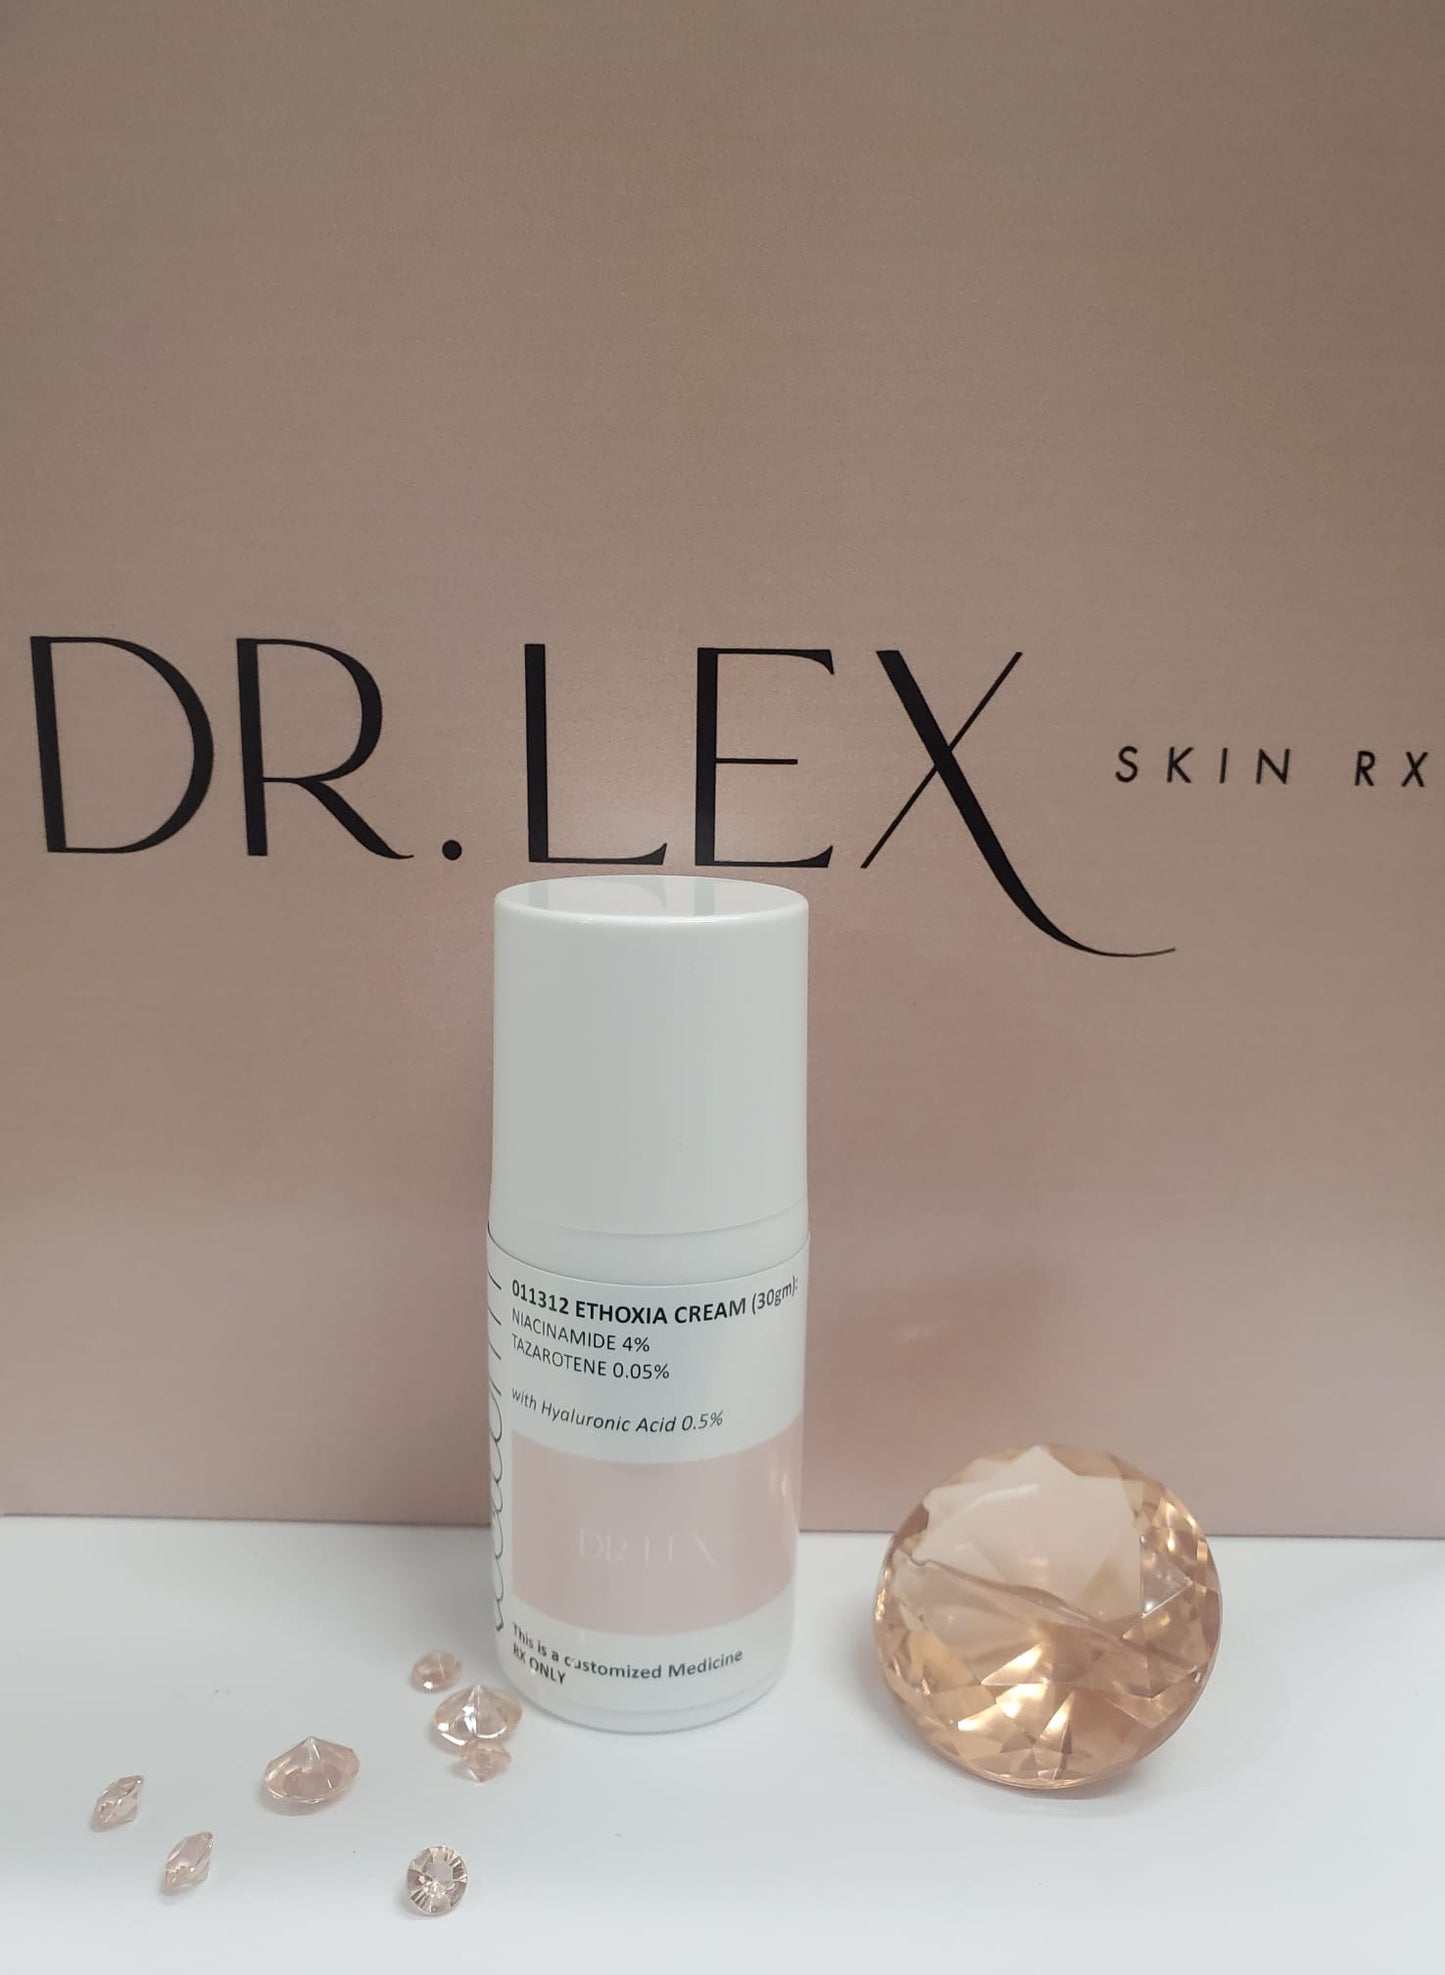 Dr. LEX Skin Rx. Ethoxia Cream